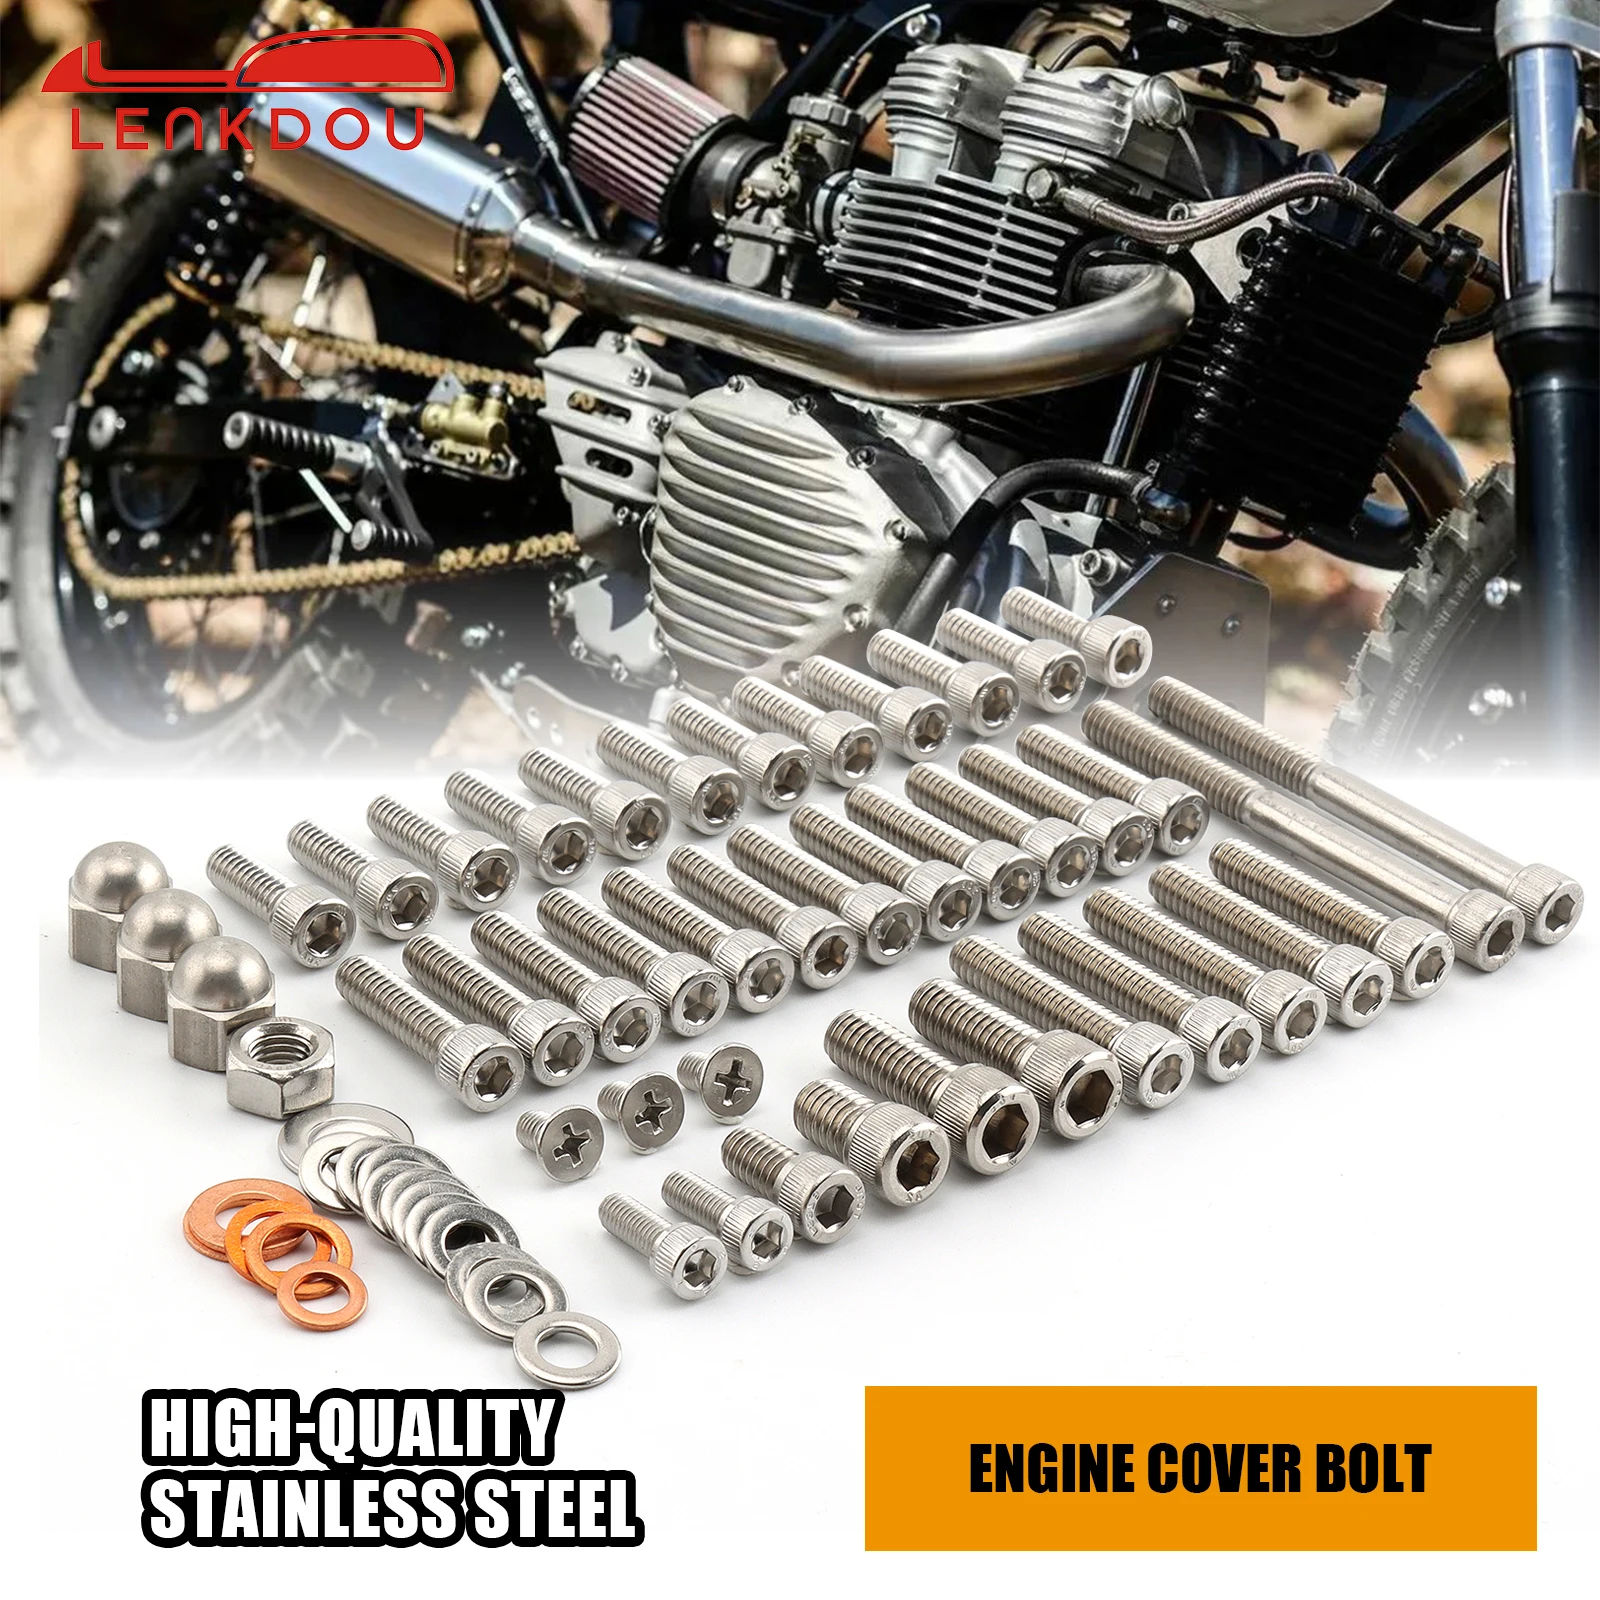 

Motorcycle Engine UNC Allen Cover Bolt Kit For Triumph Bonneville T120 T140 TR6 TR7 TSS TSX Moto Accessories Stainless Steel